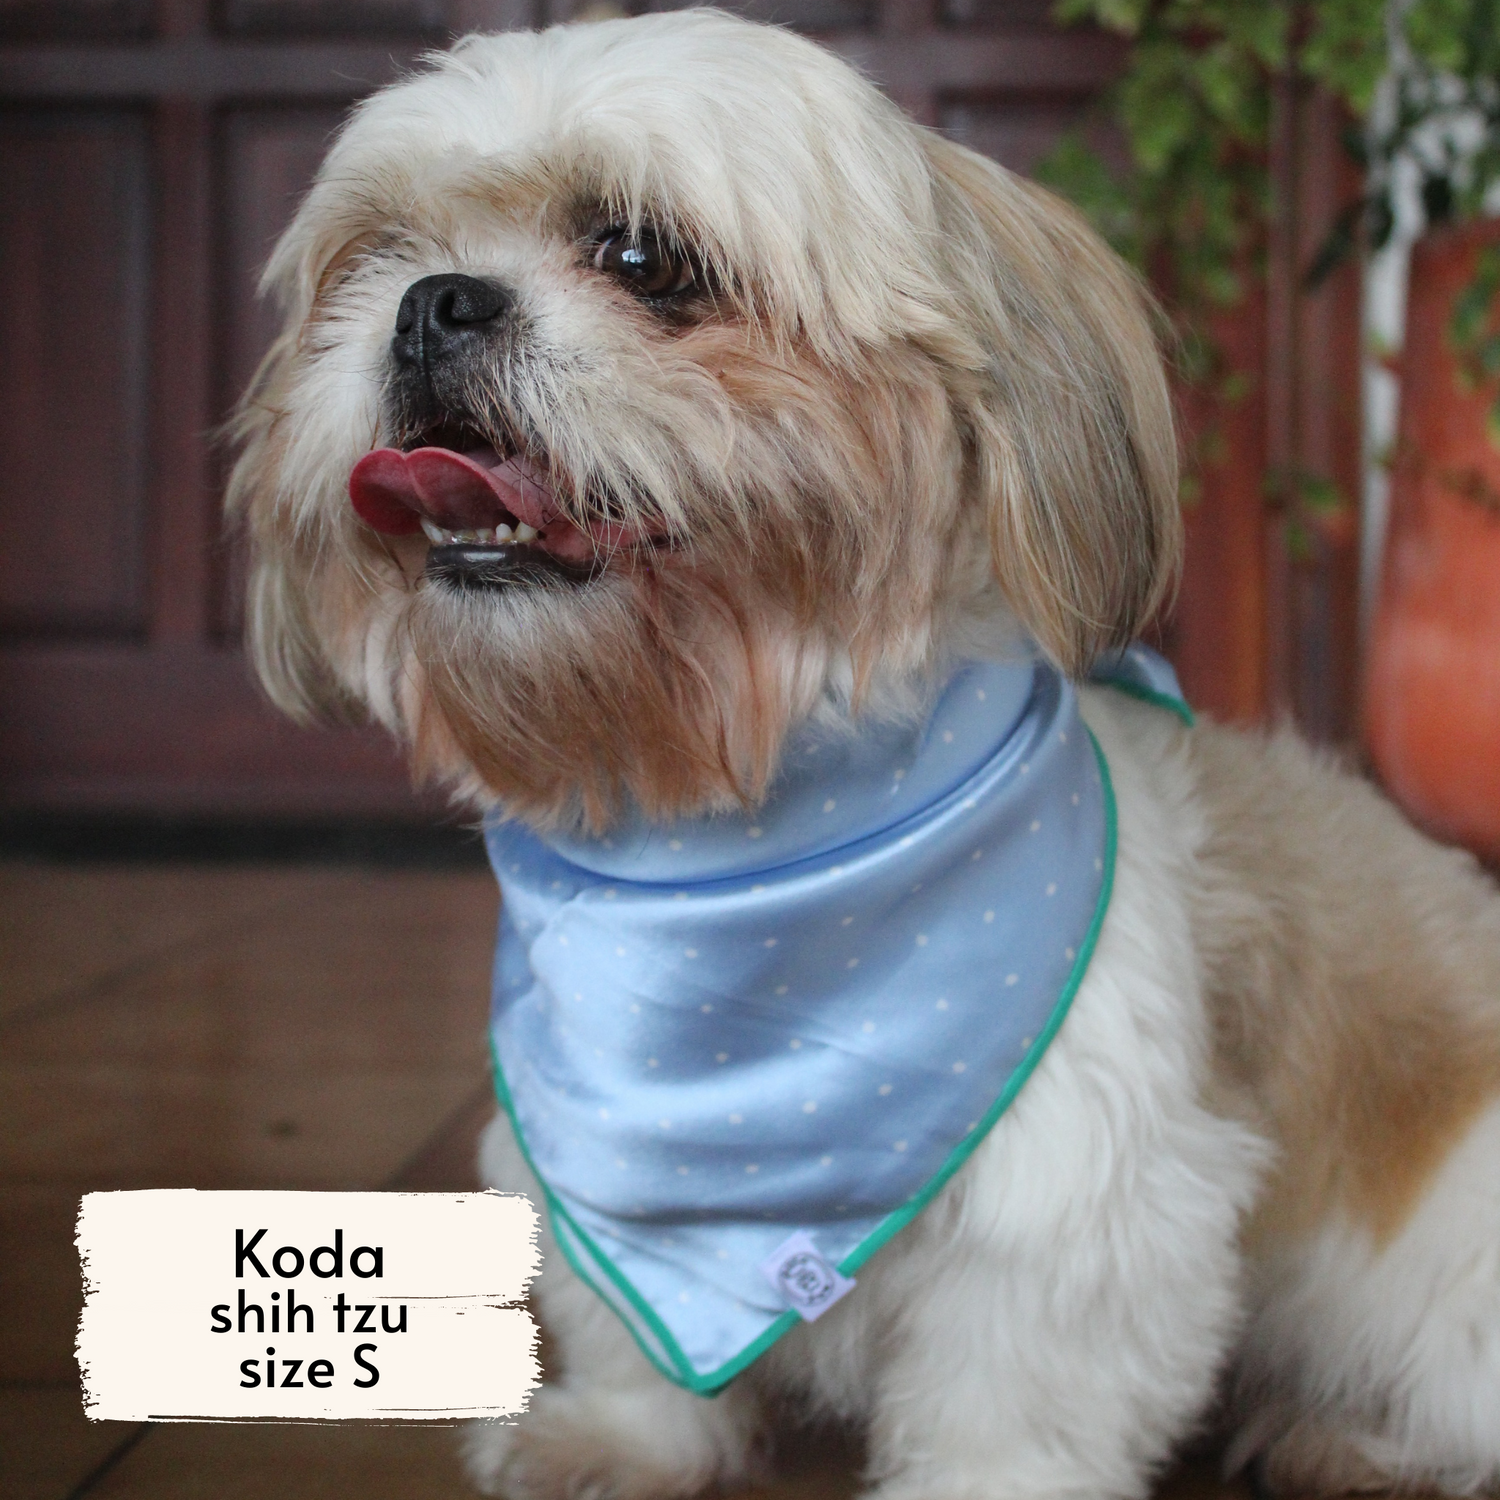 Pata Paw blue polka dot bandana as seen on a small dog, Koda, a shih tzu.